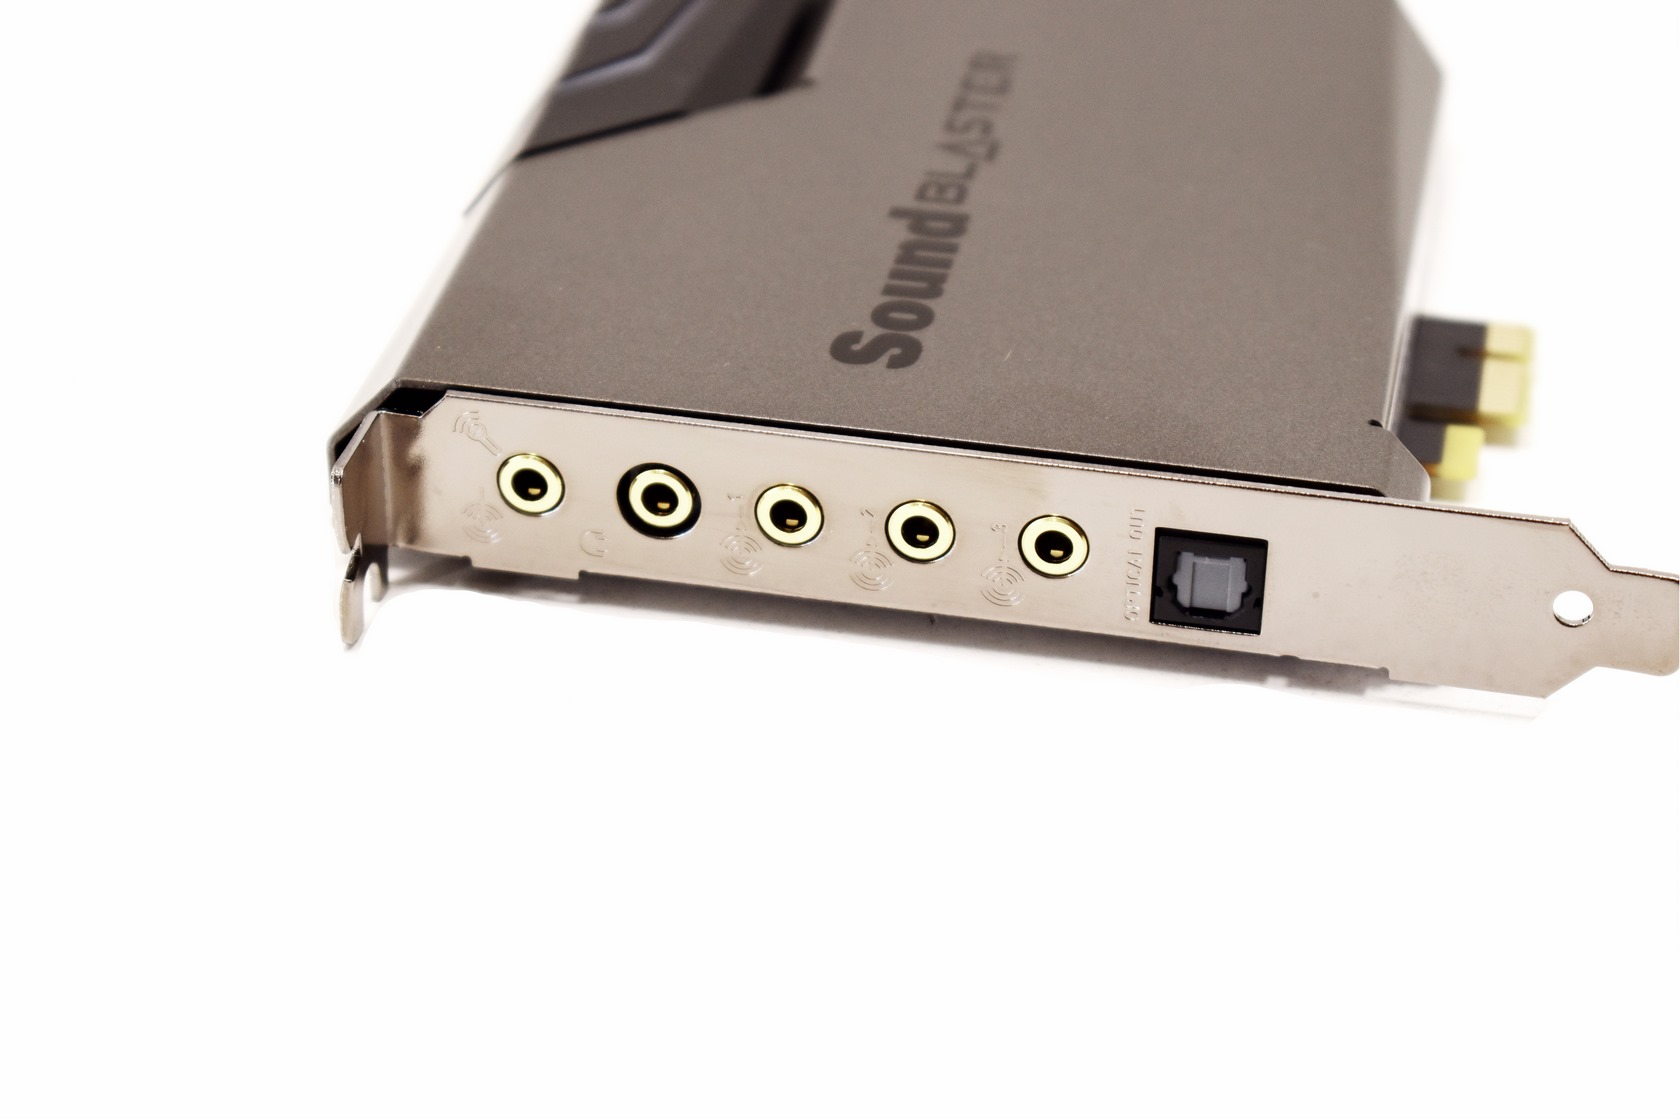 Creative Sound Blaster AE-7 PCIe Sound Card Review